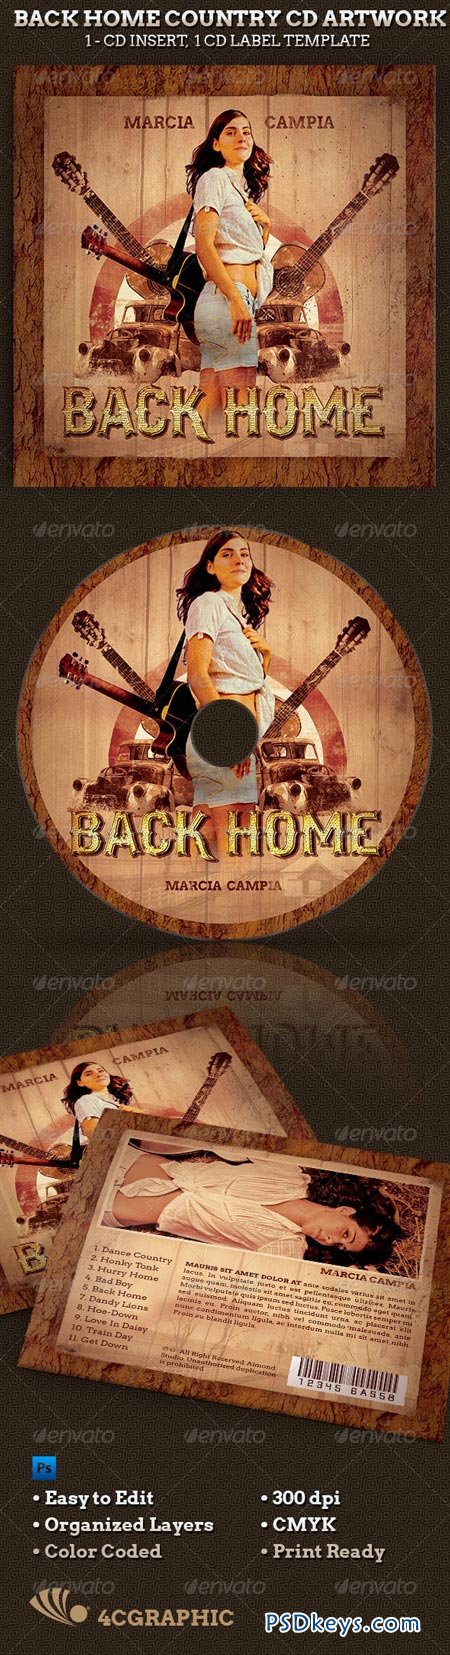 Back Home Country Music CD Artwork 6916154